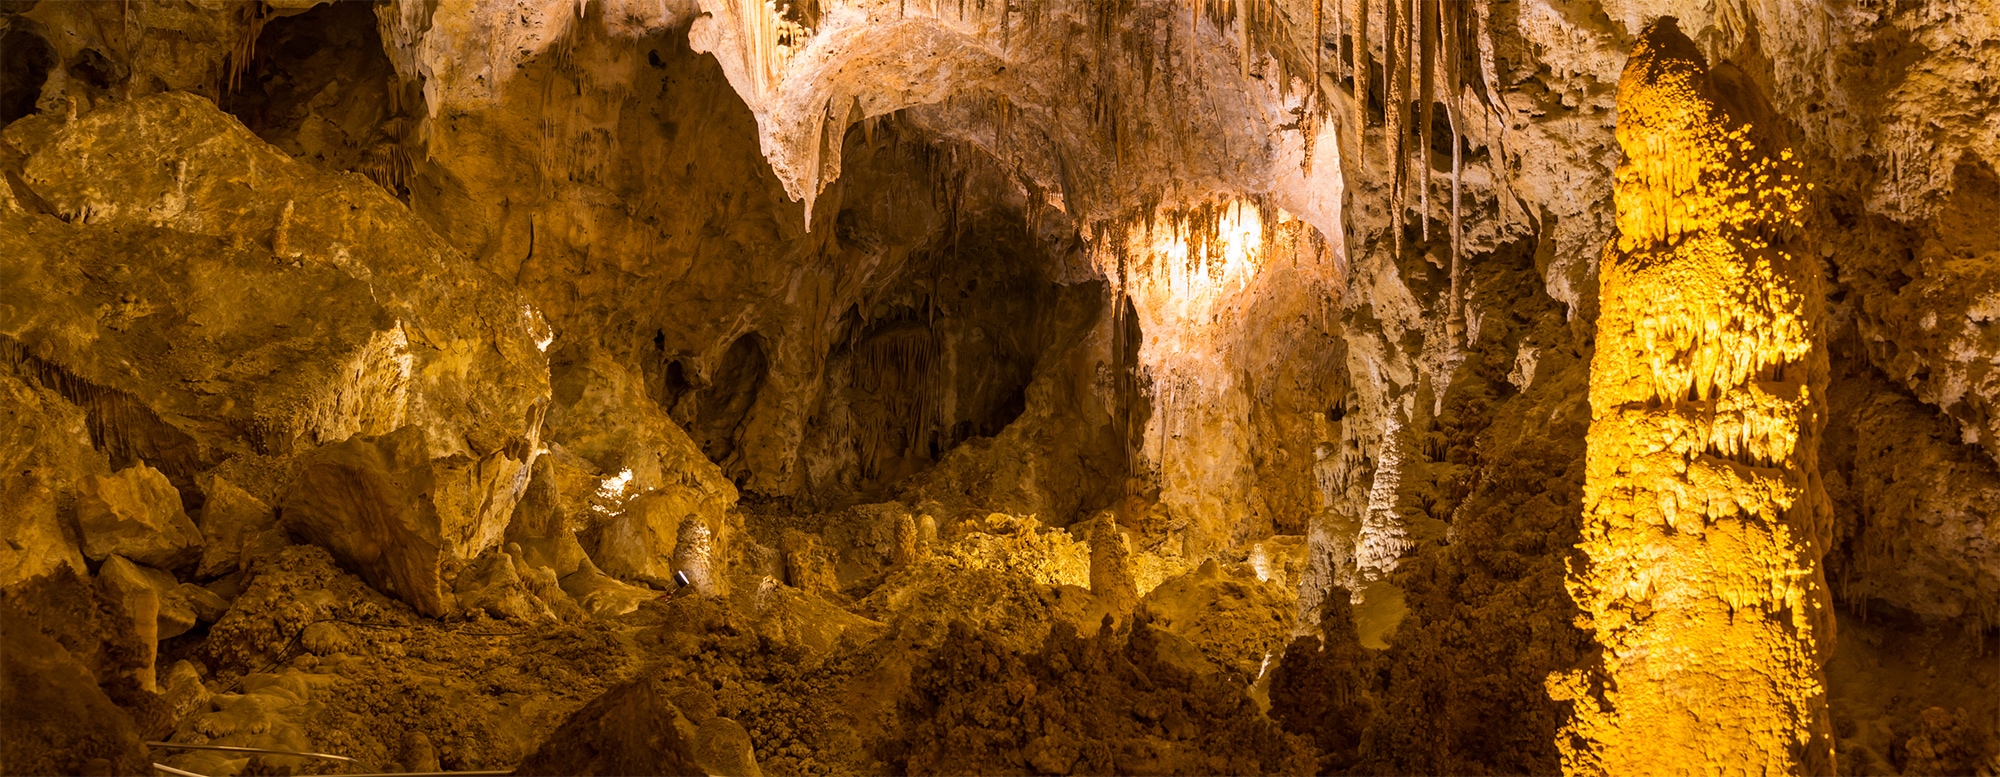 Grotte stalattiti stalagmiti